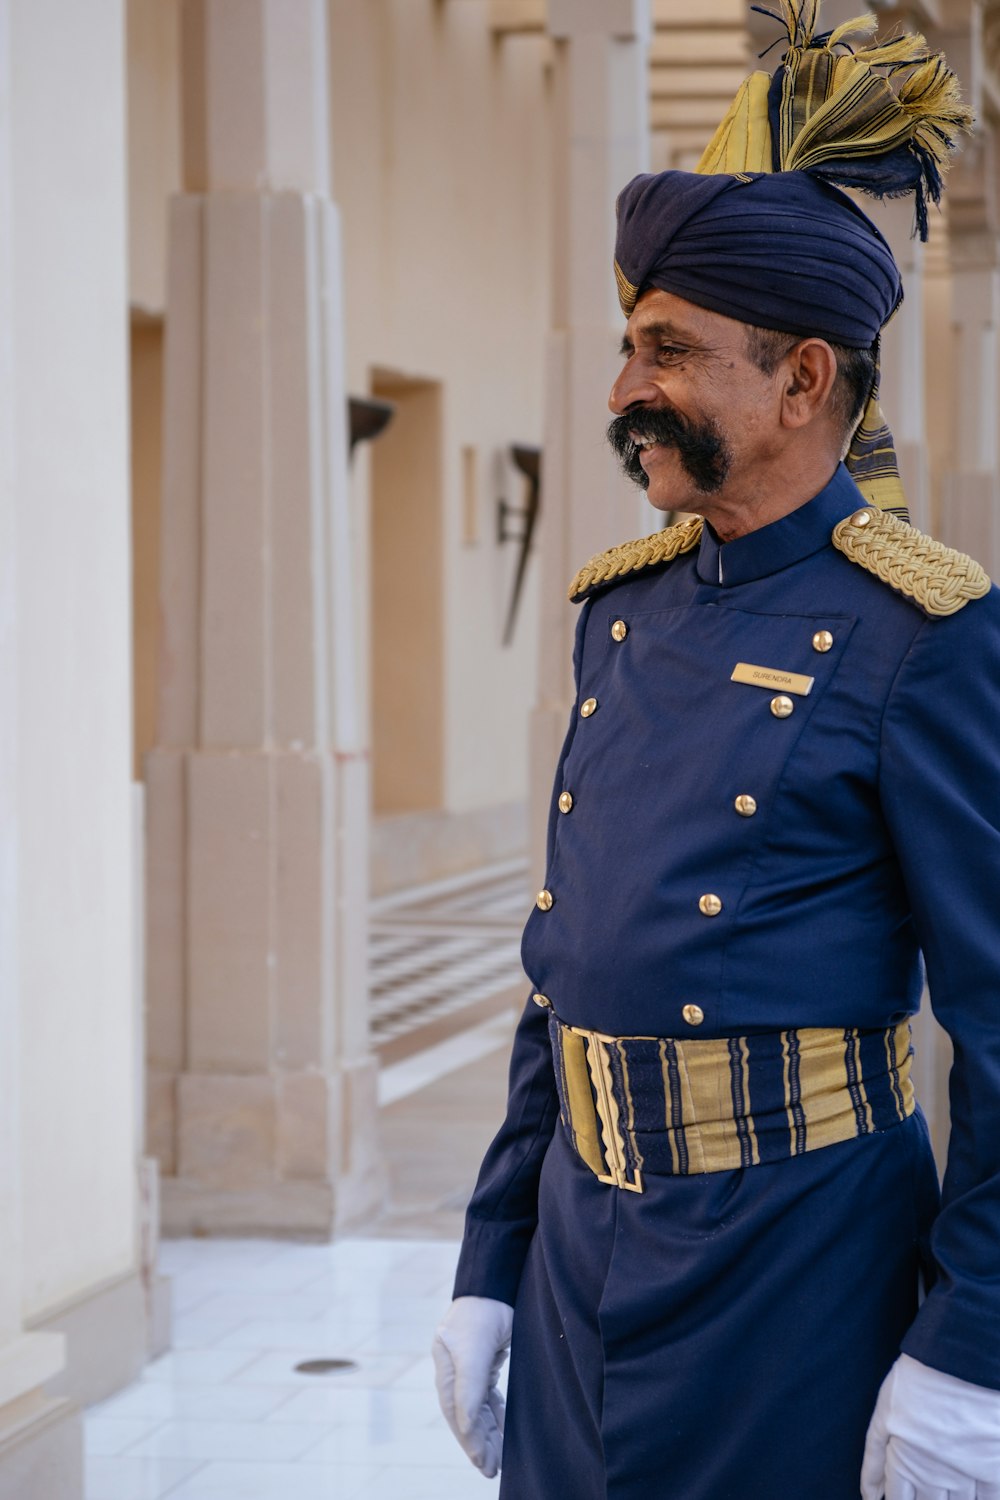 a man in a blue uniform standing in a hallway